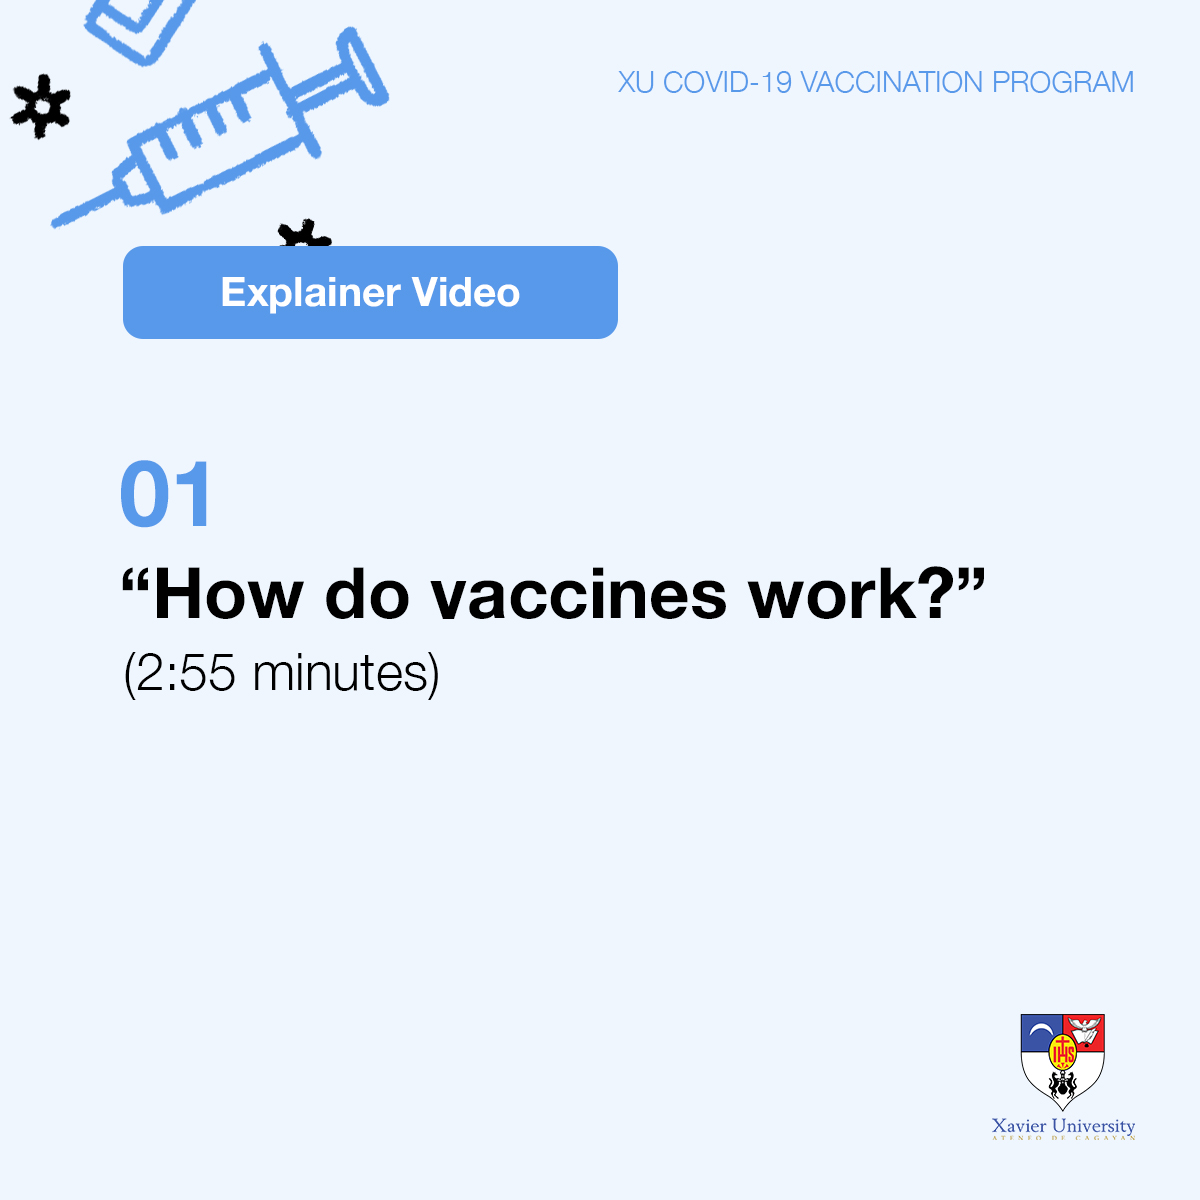 Vaccination Program 02 general